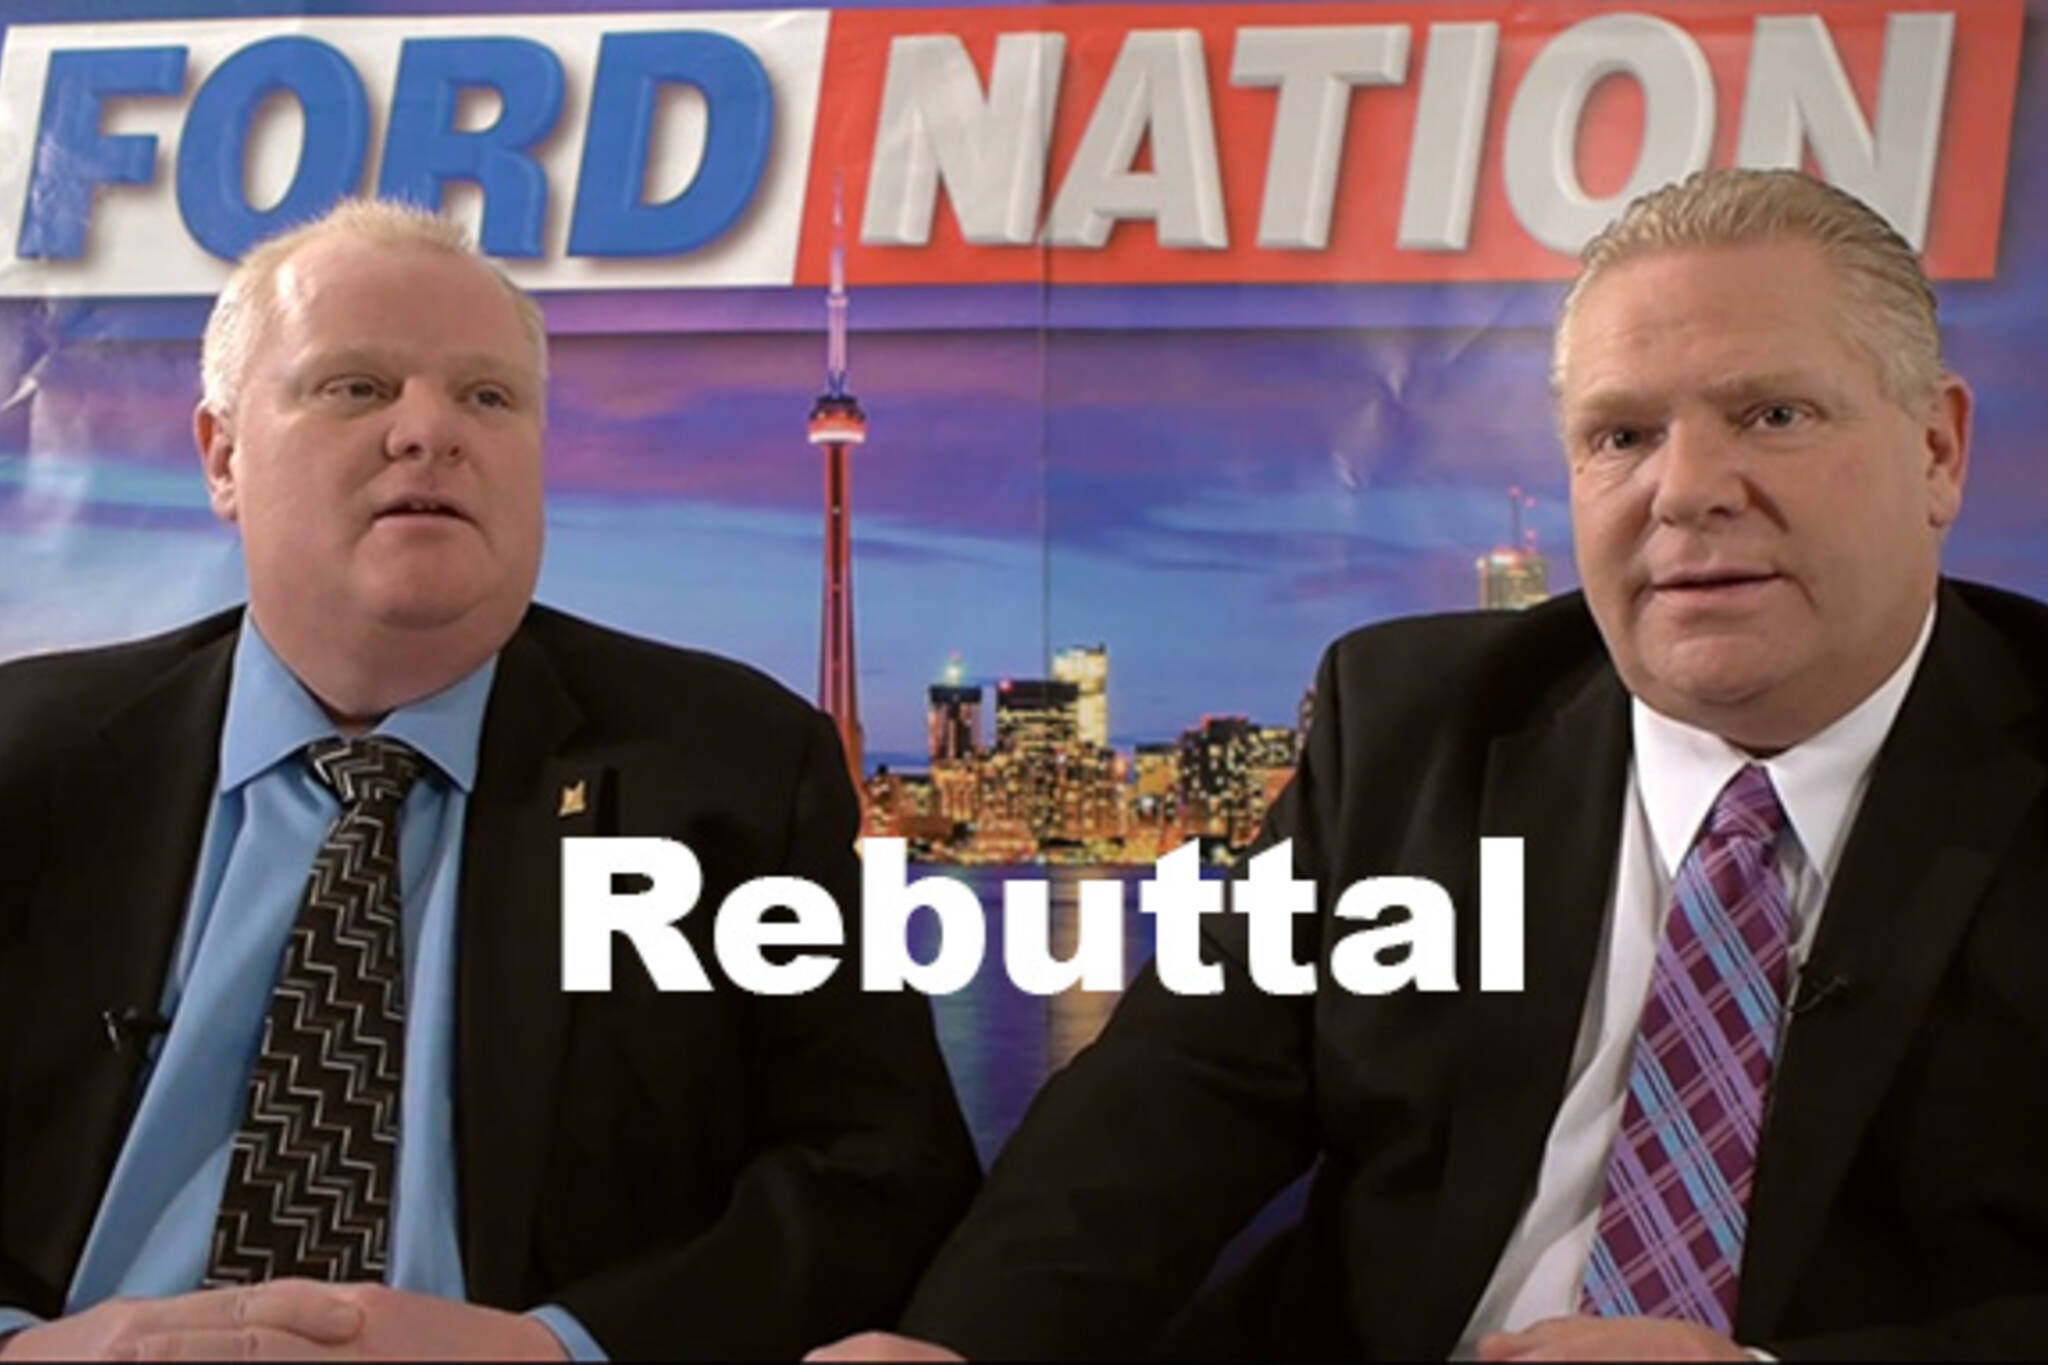 Ford Nation Rebuttal